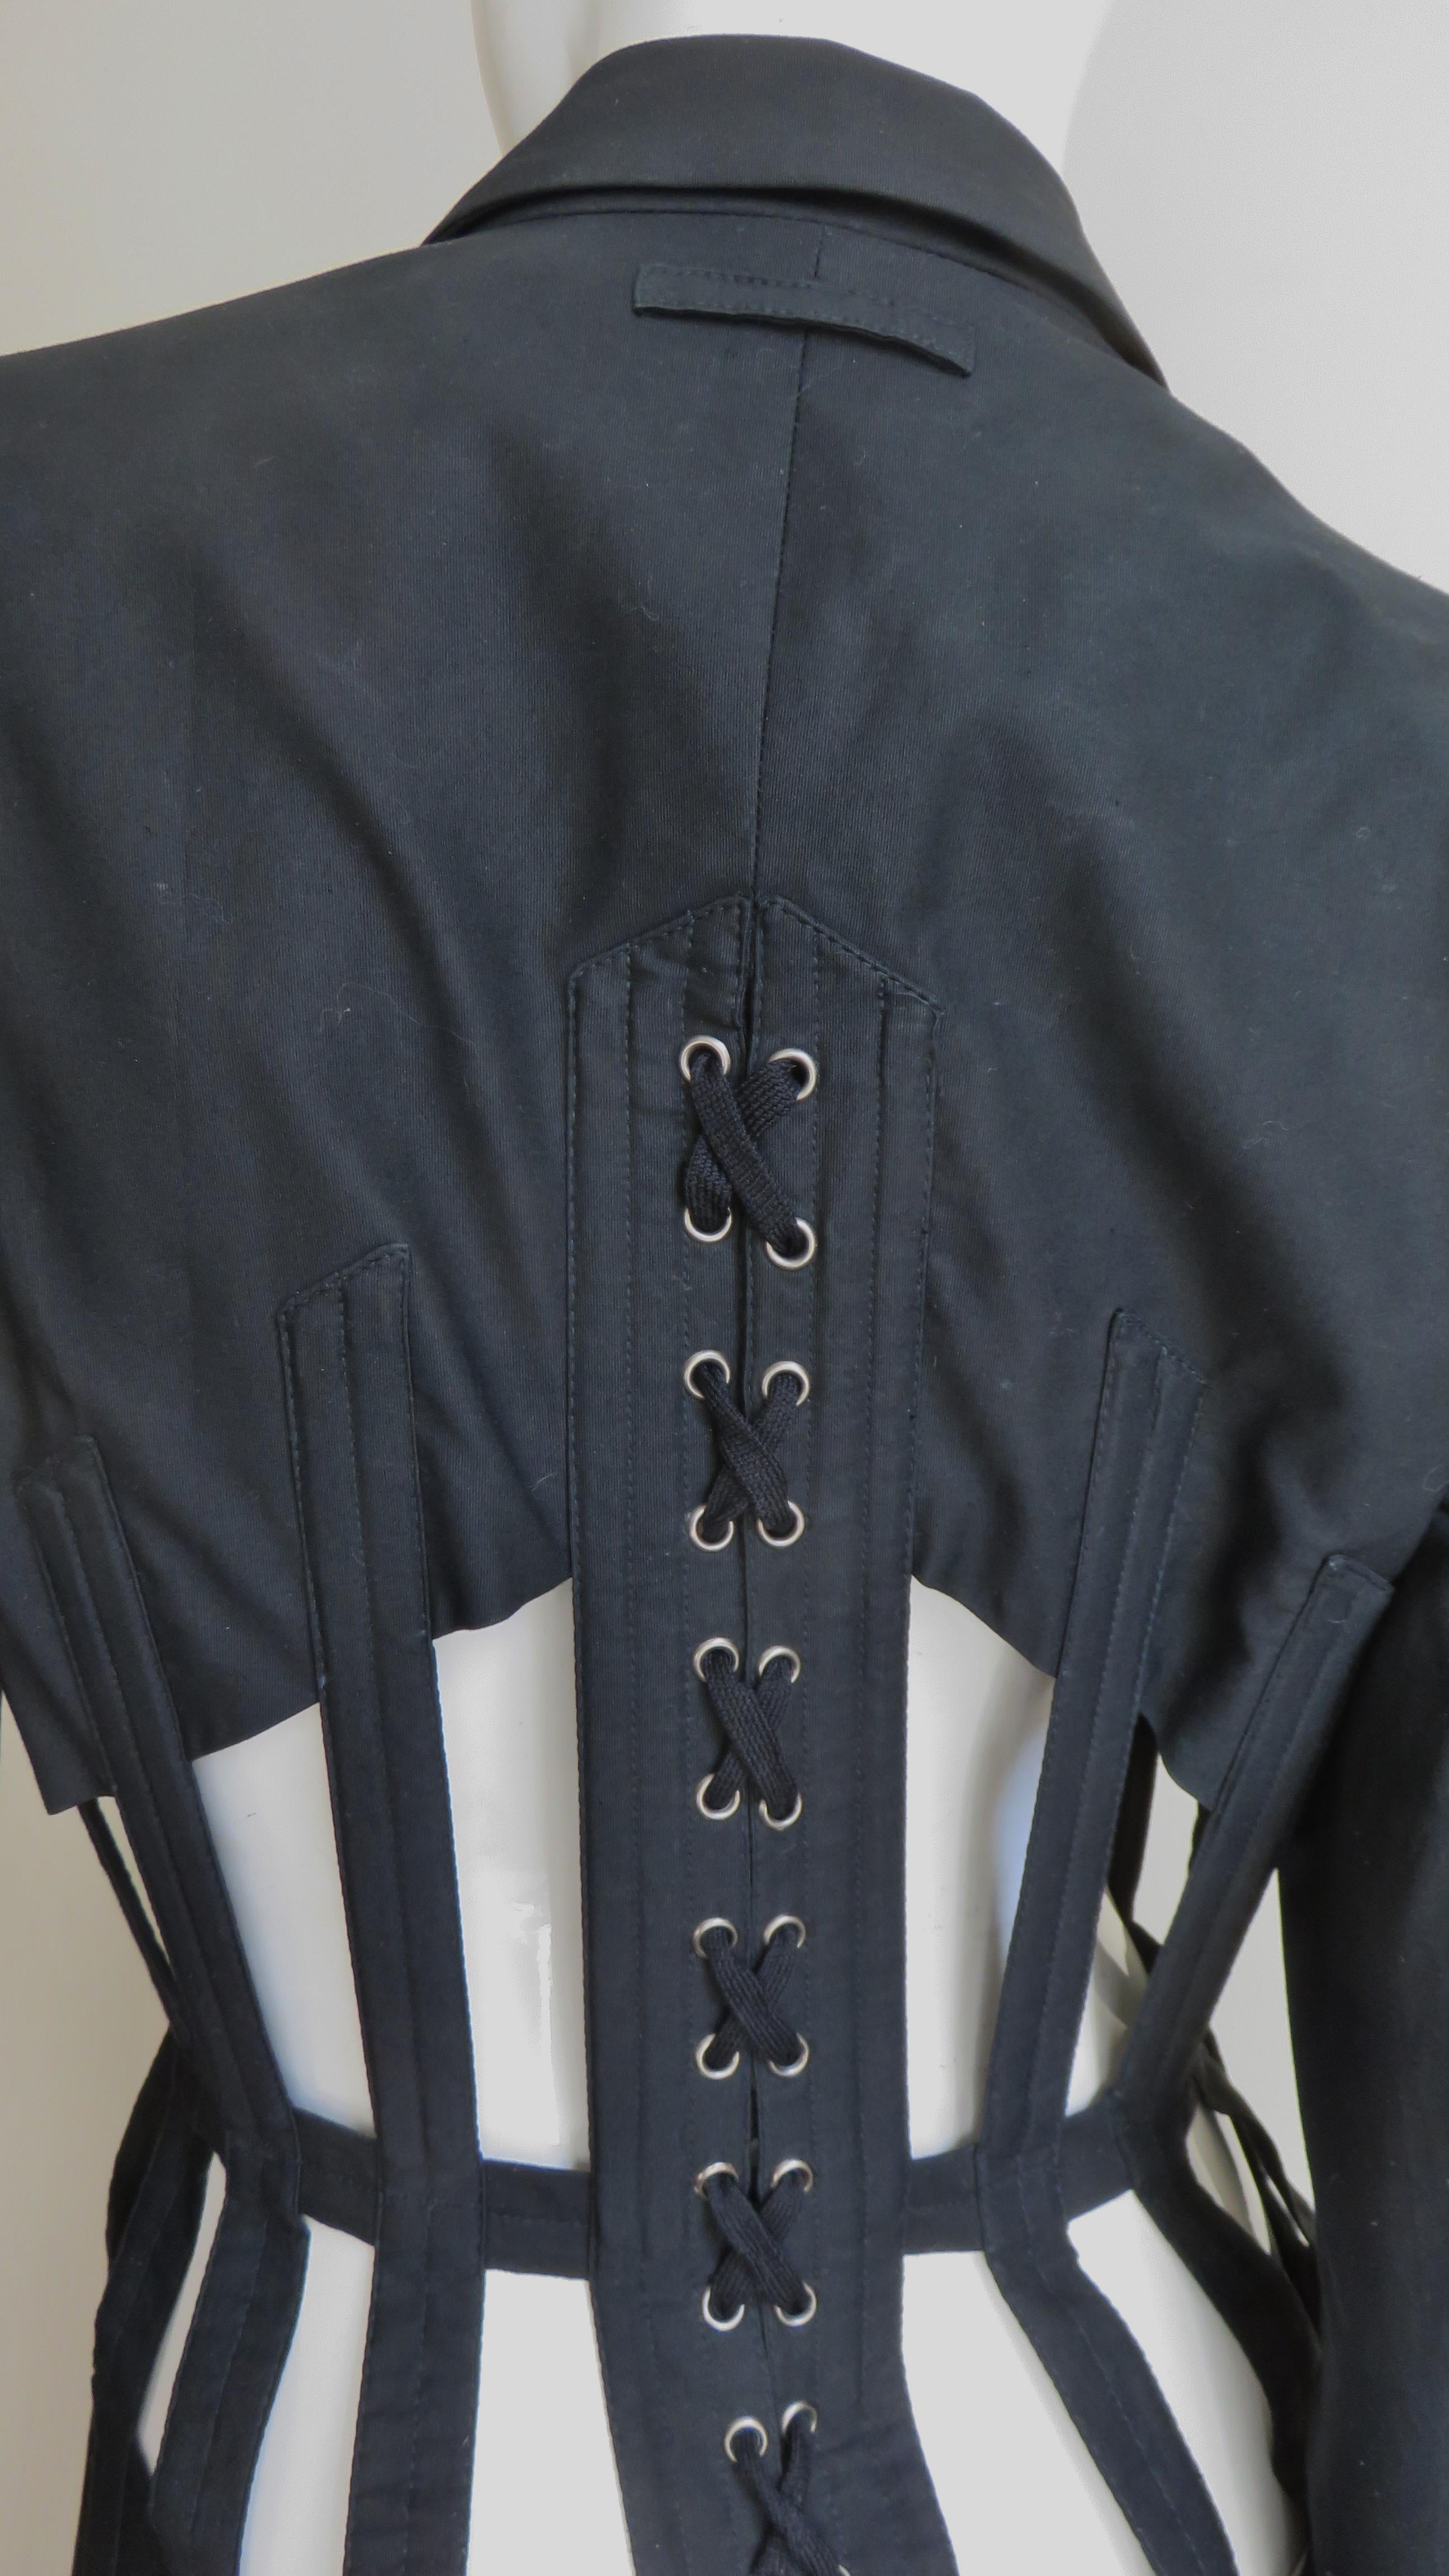 Jean Paul Gaultier Iconic Cage Corset lace up Jacket Pant Suit S/S 1989 For Sale 12